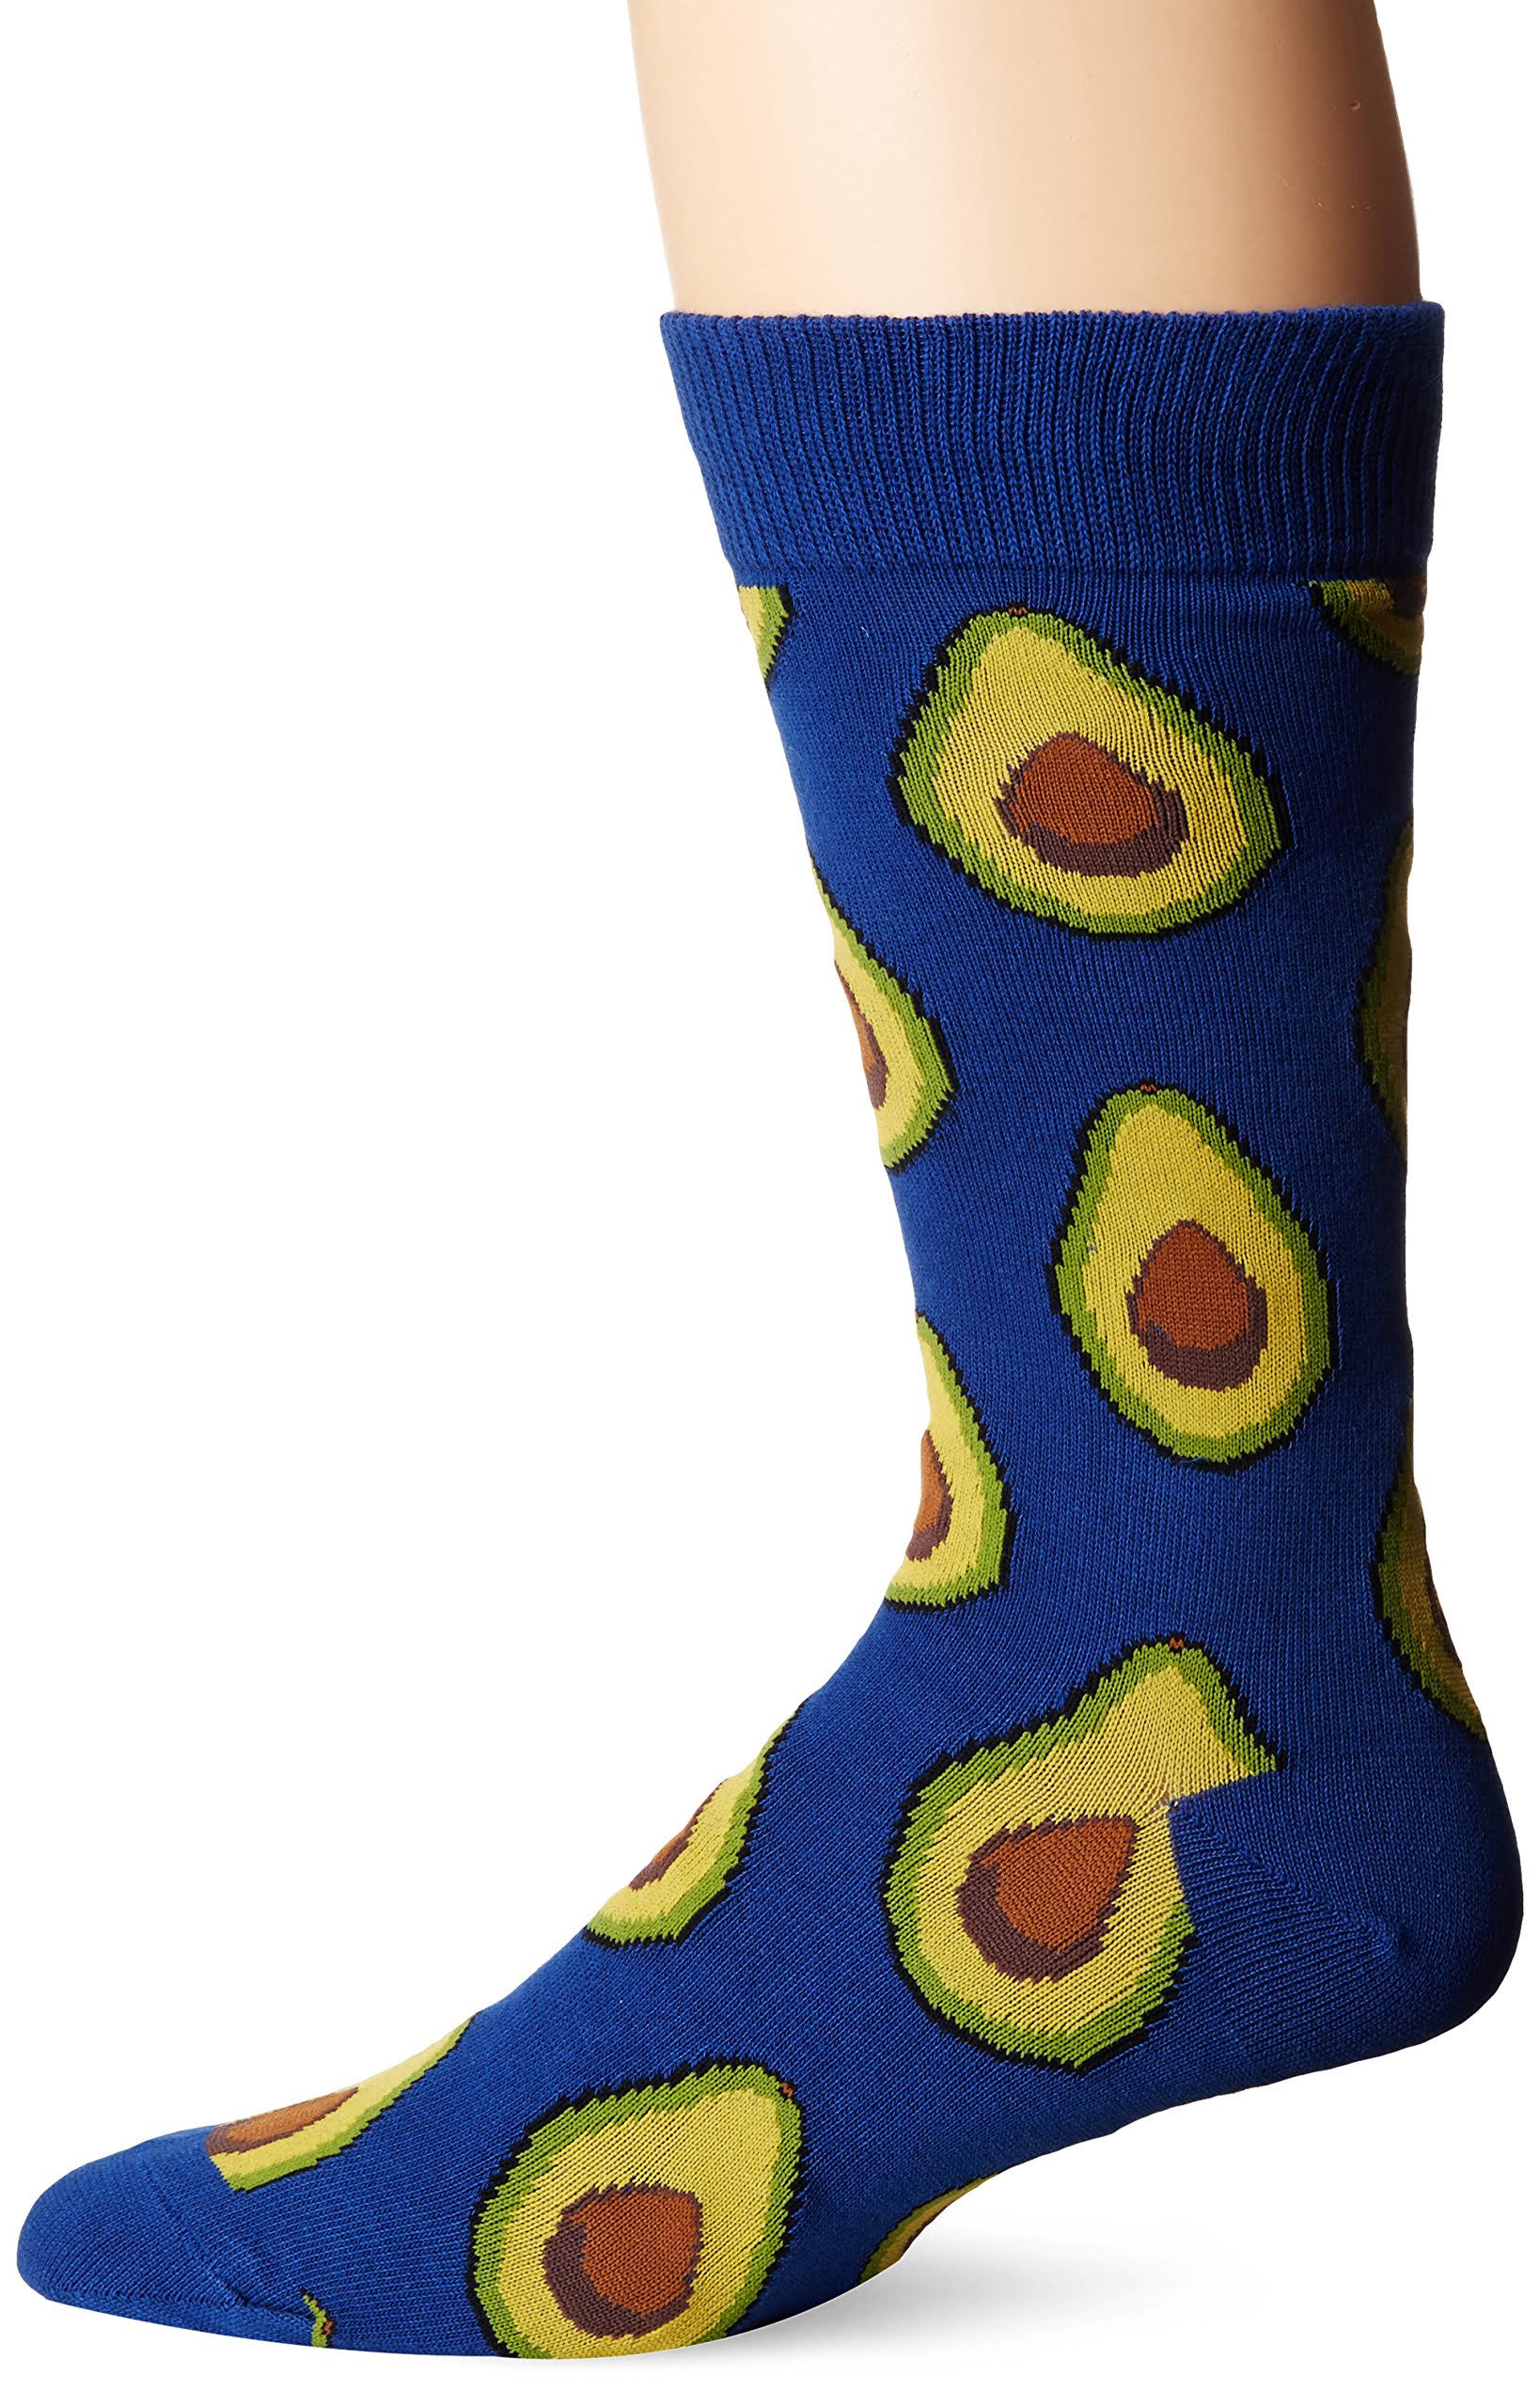 Socksmith Mens Novelty Crew Socks - Avocado, Purple